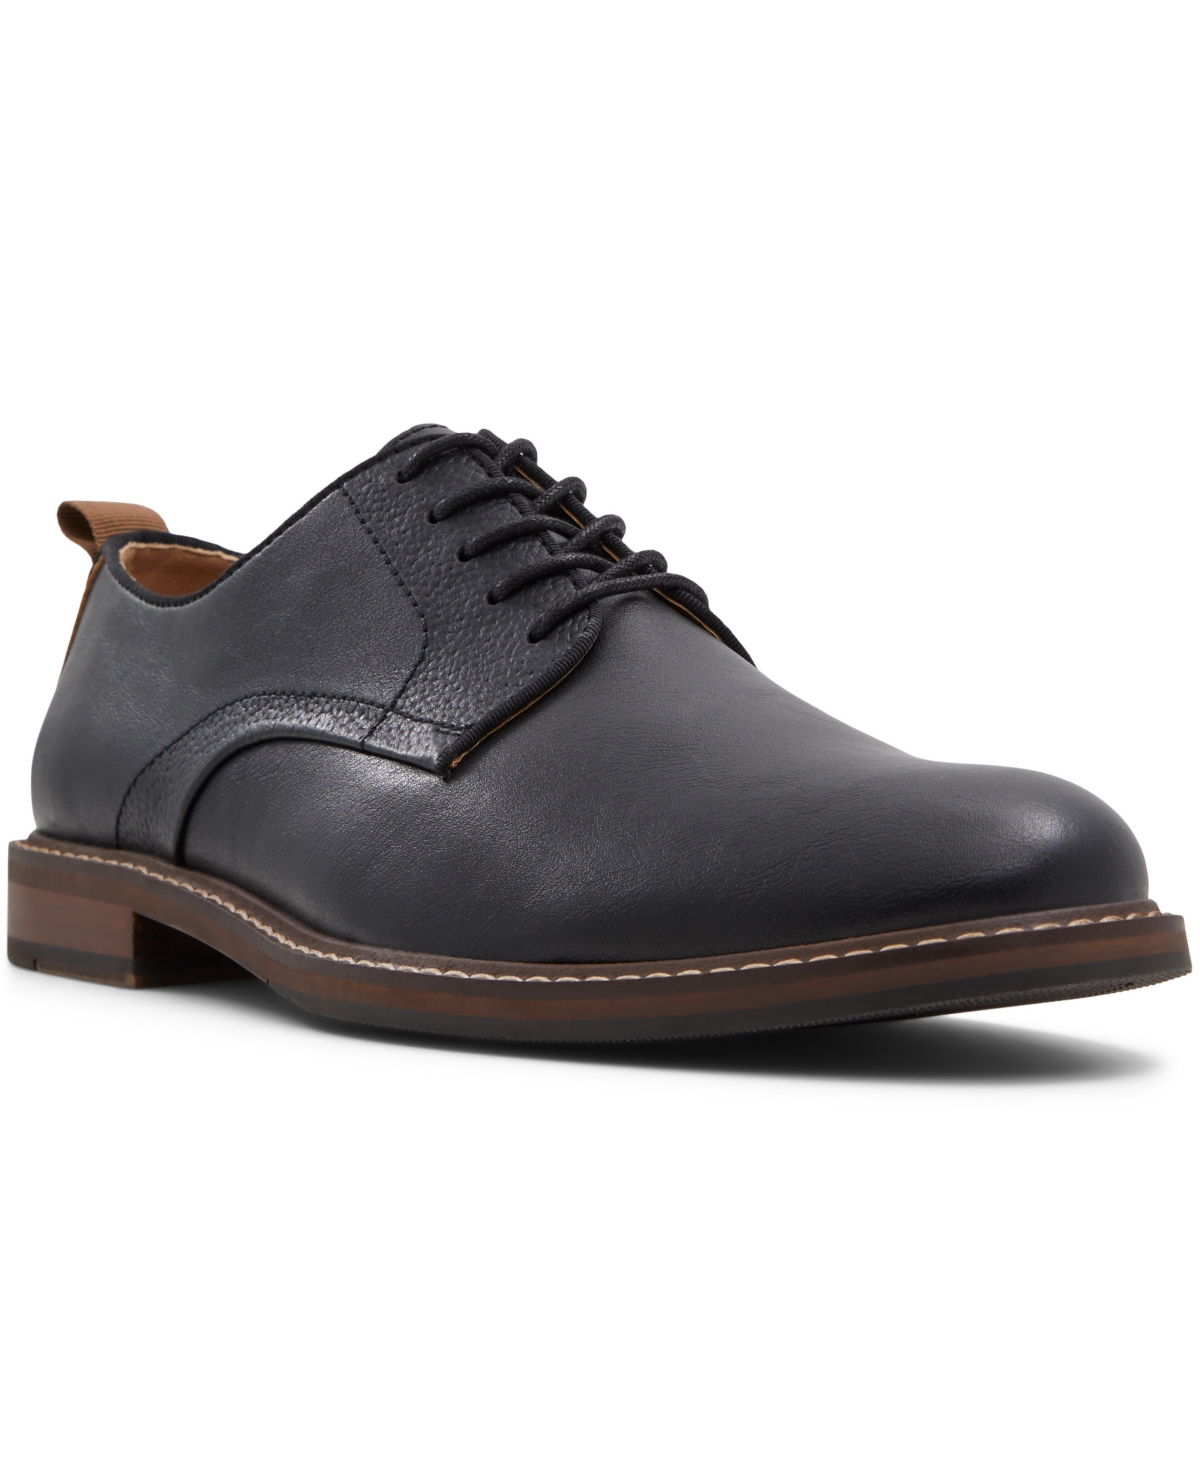 Men's Newland Derby Shoes - Black